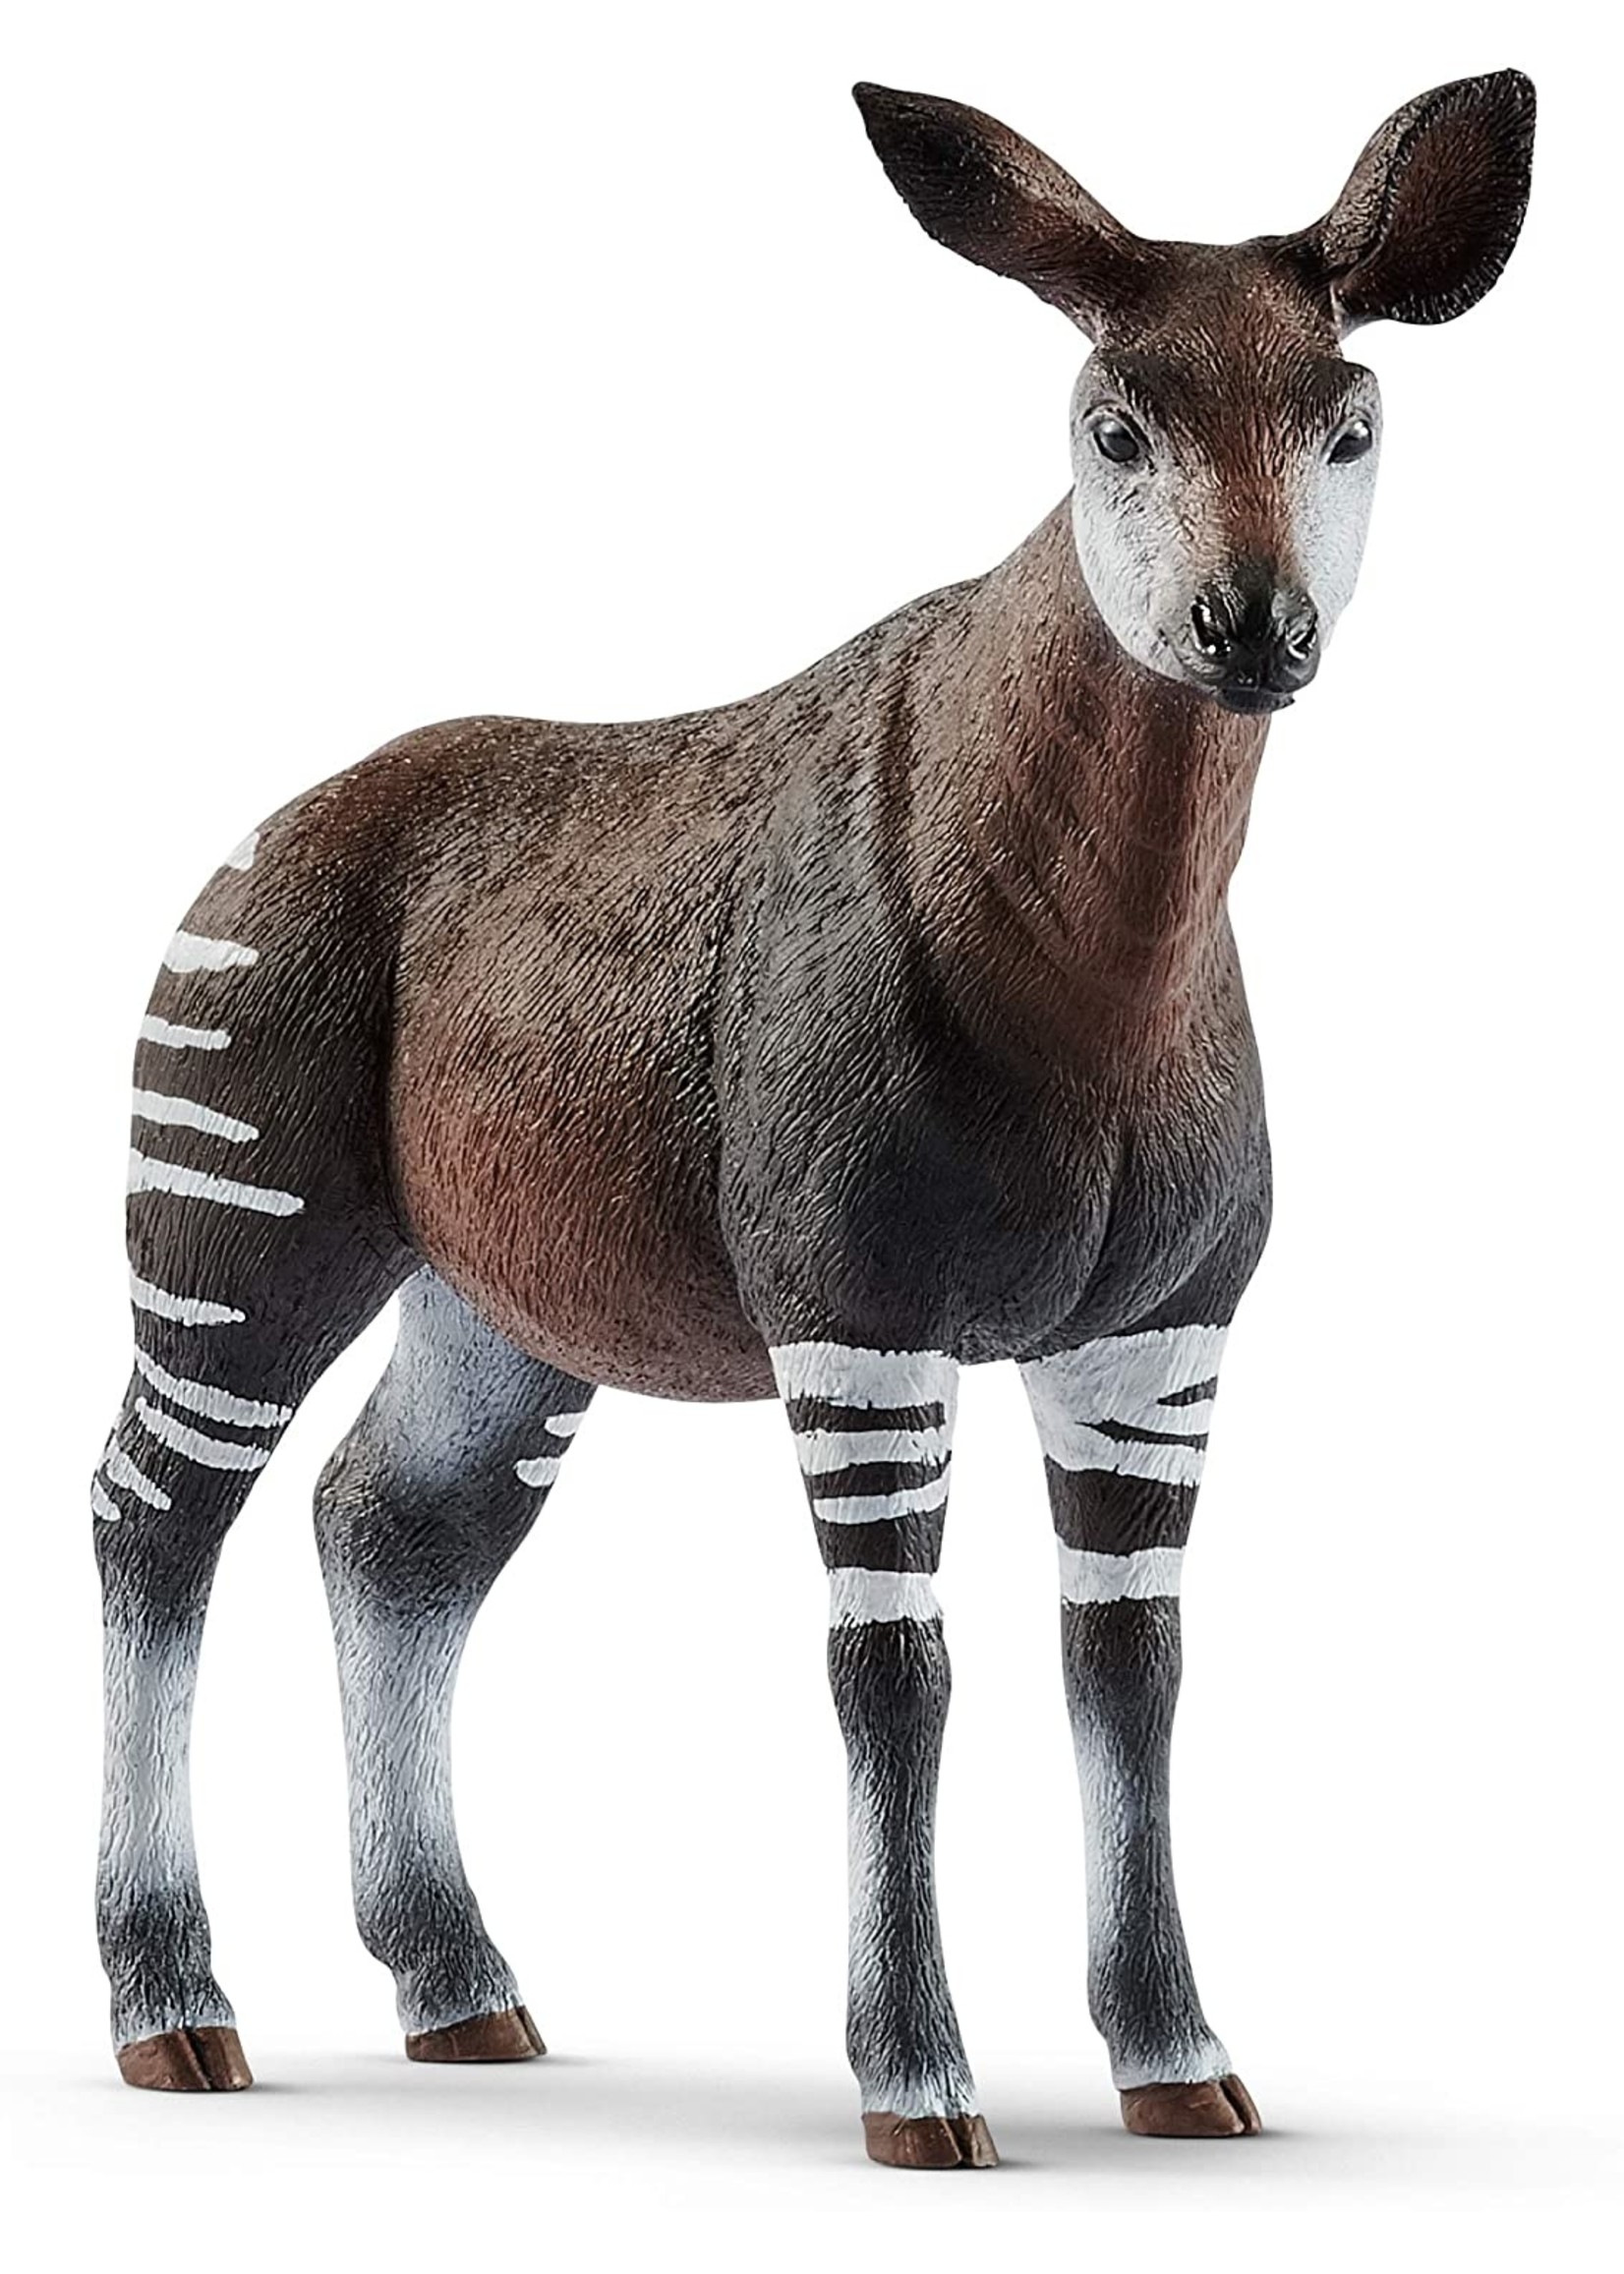 Schleich 14830 - Okapi